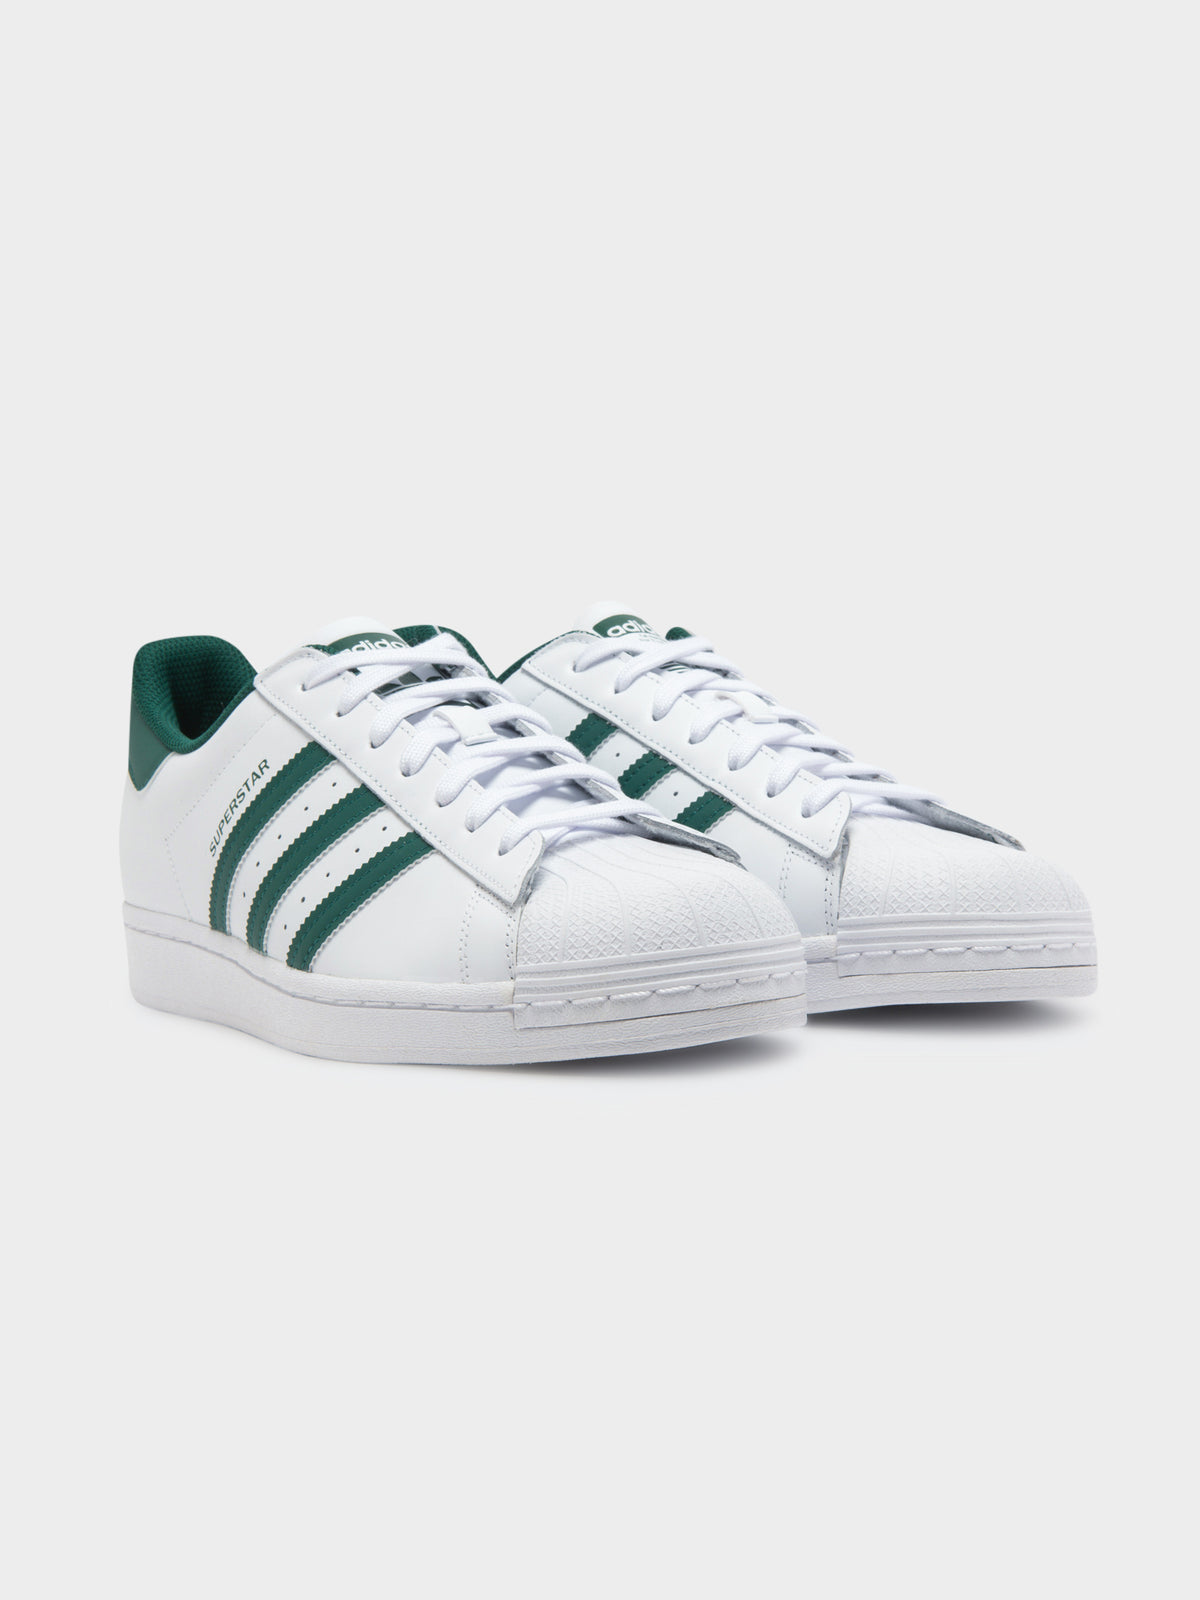 Unisex Superstar Shoe in Green &amp; White